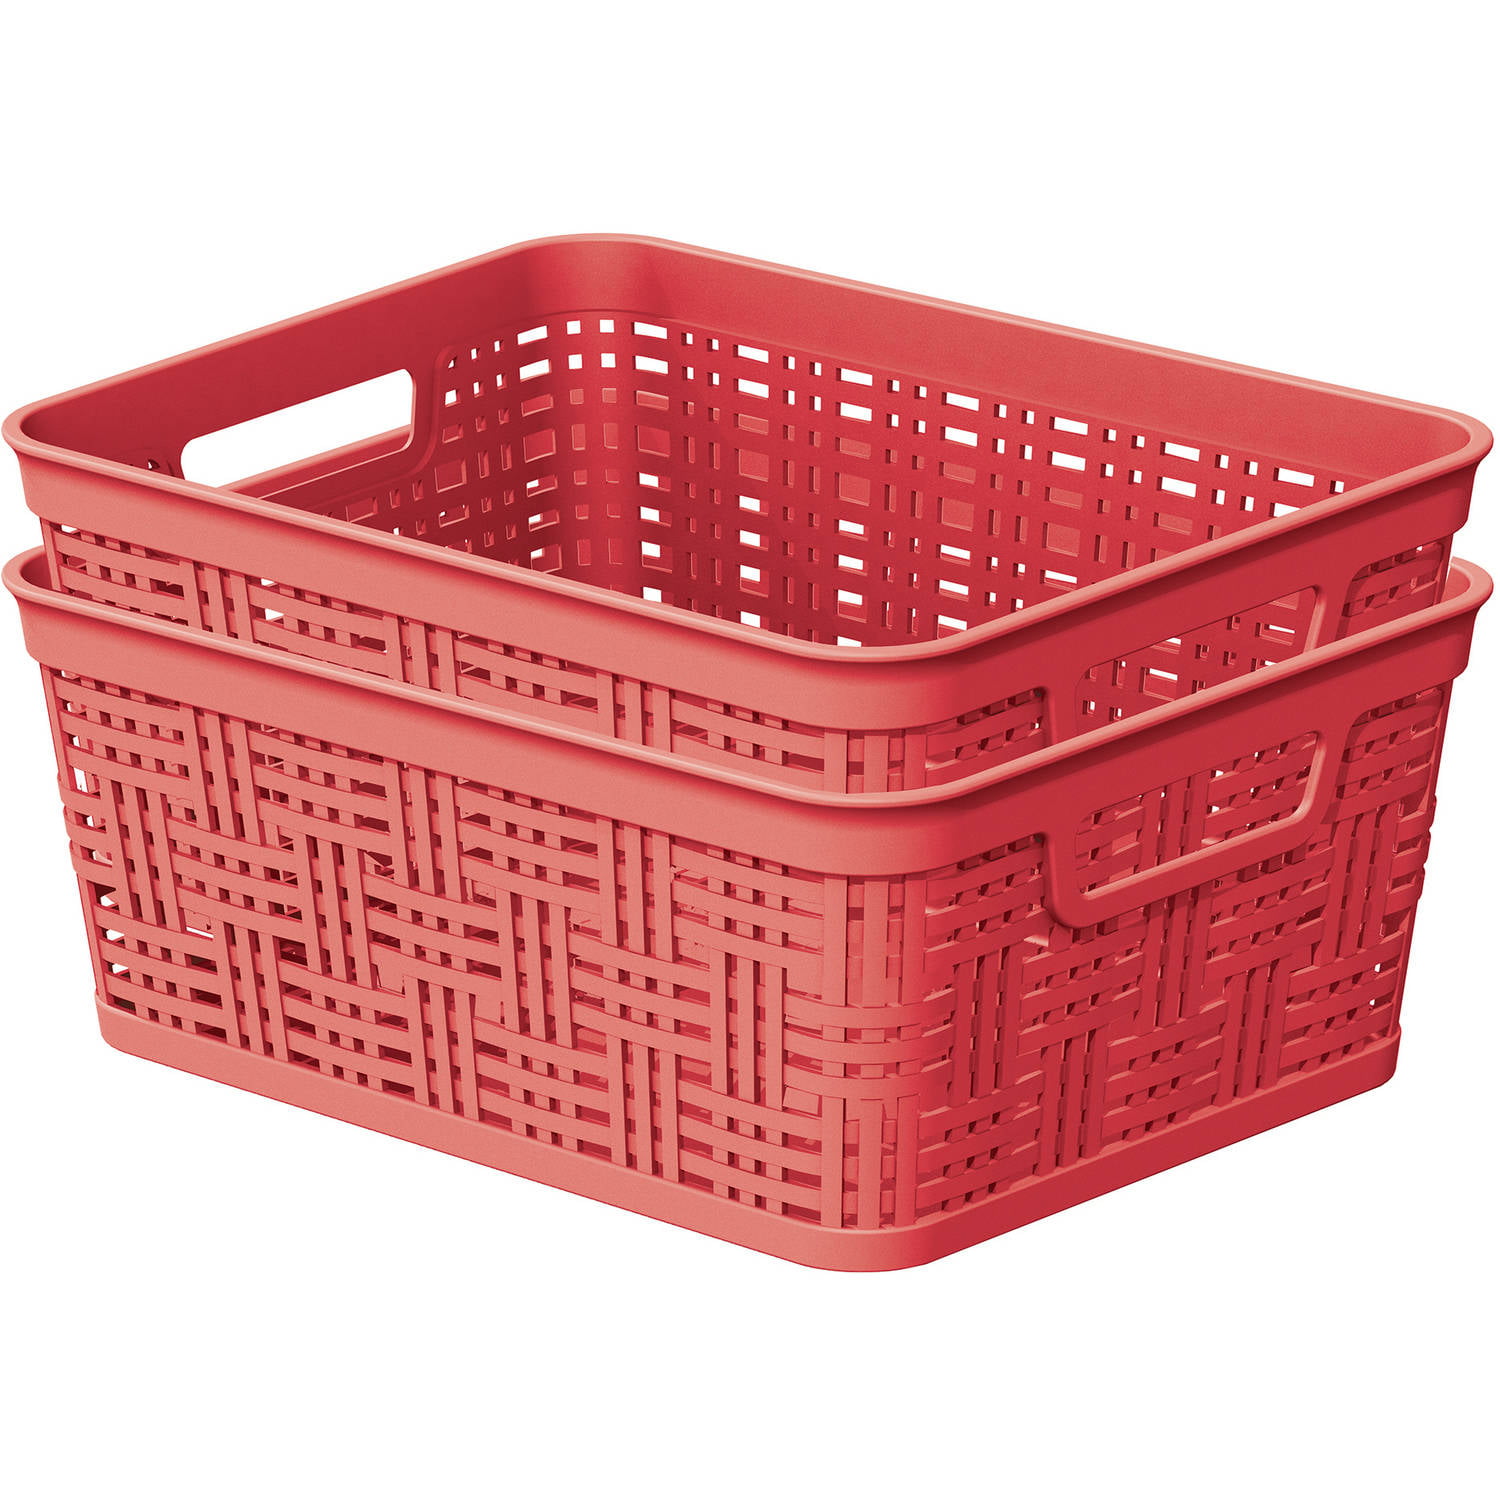 decorative bins and baskets